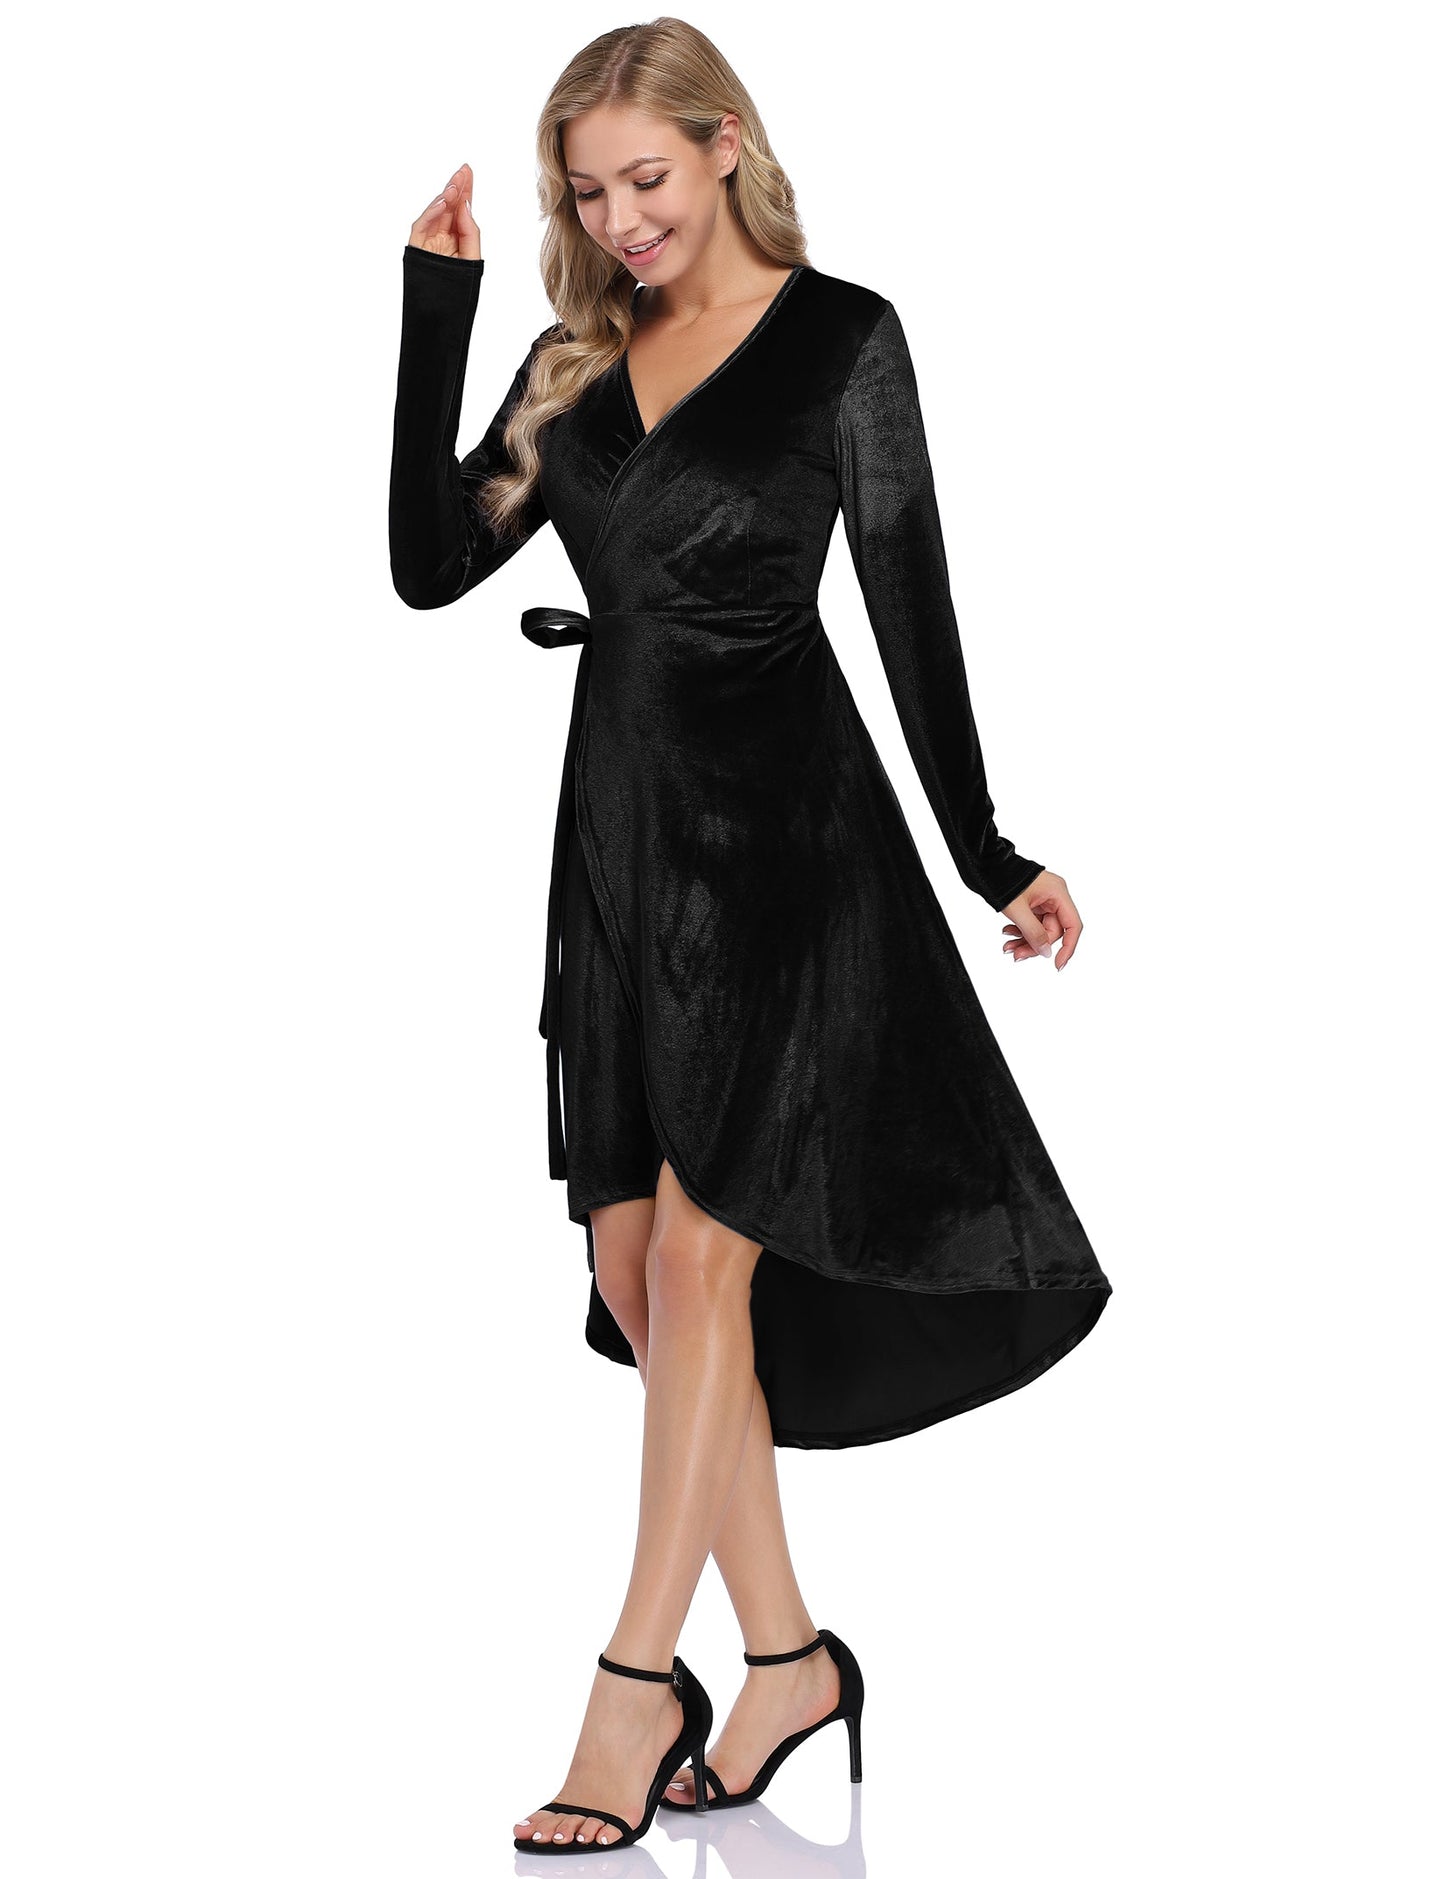 YESFASHION Women Velvet V-Neck Long Sleeve Empire Party Dress Black